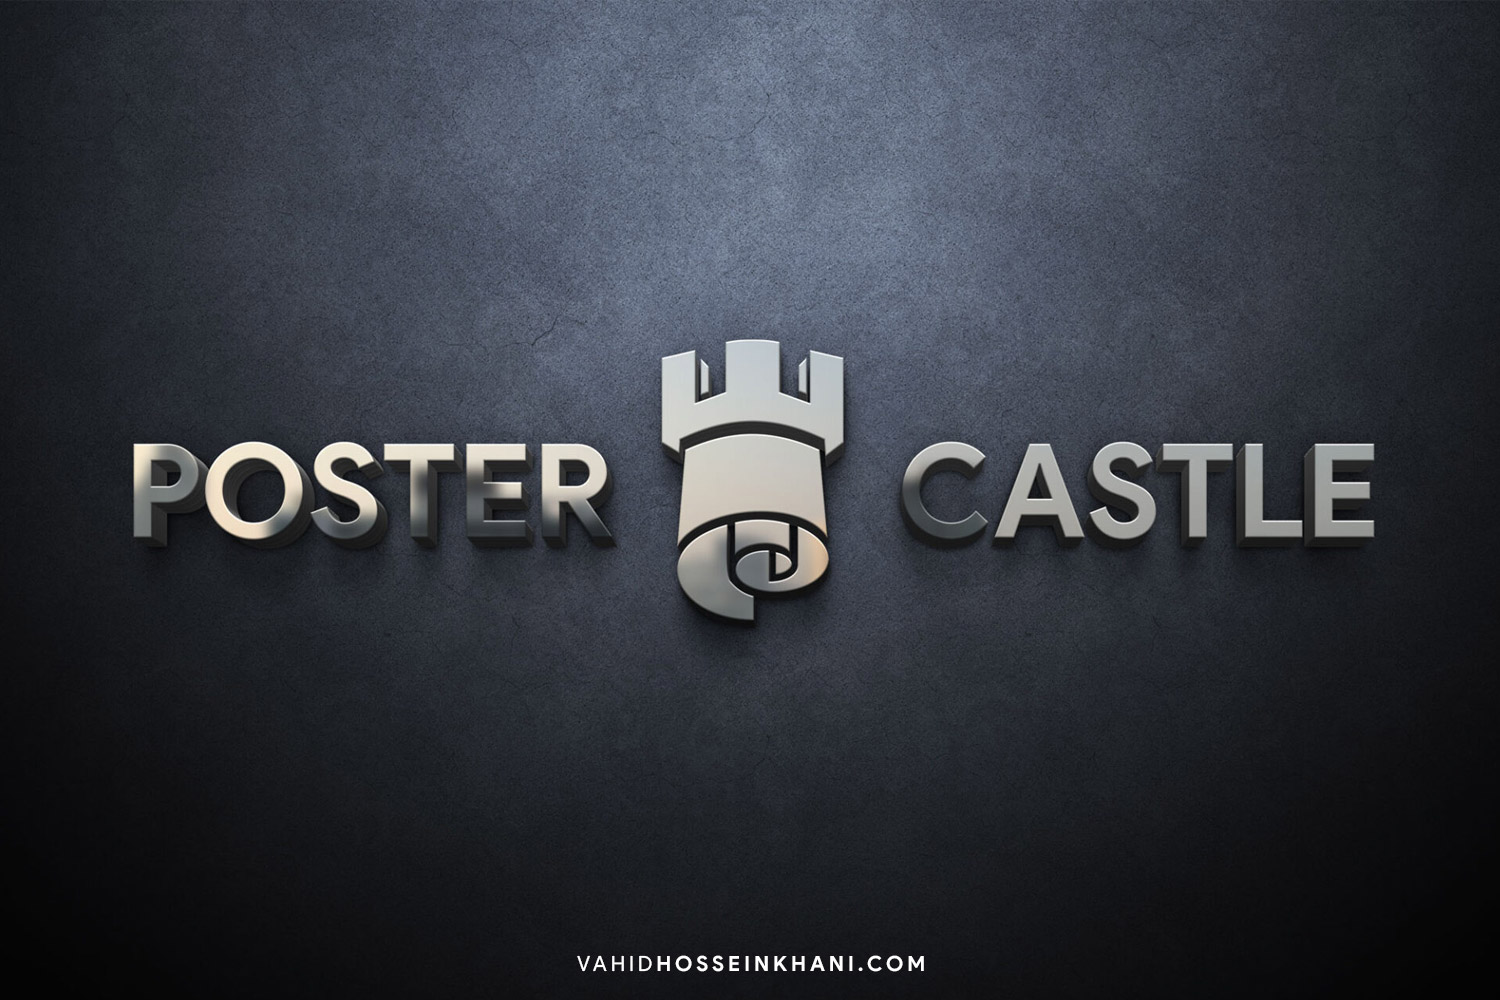 postercastle-logo-vahid-hosseinkhani